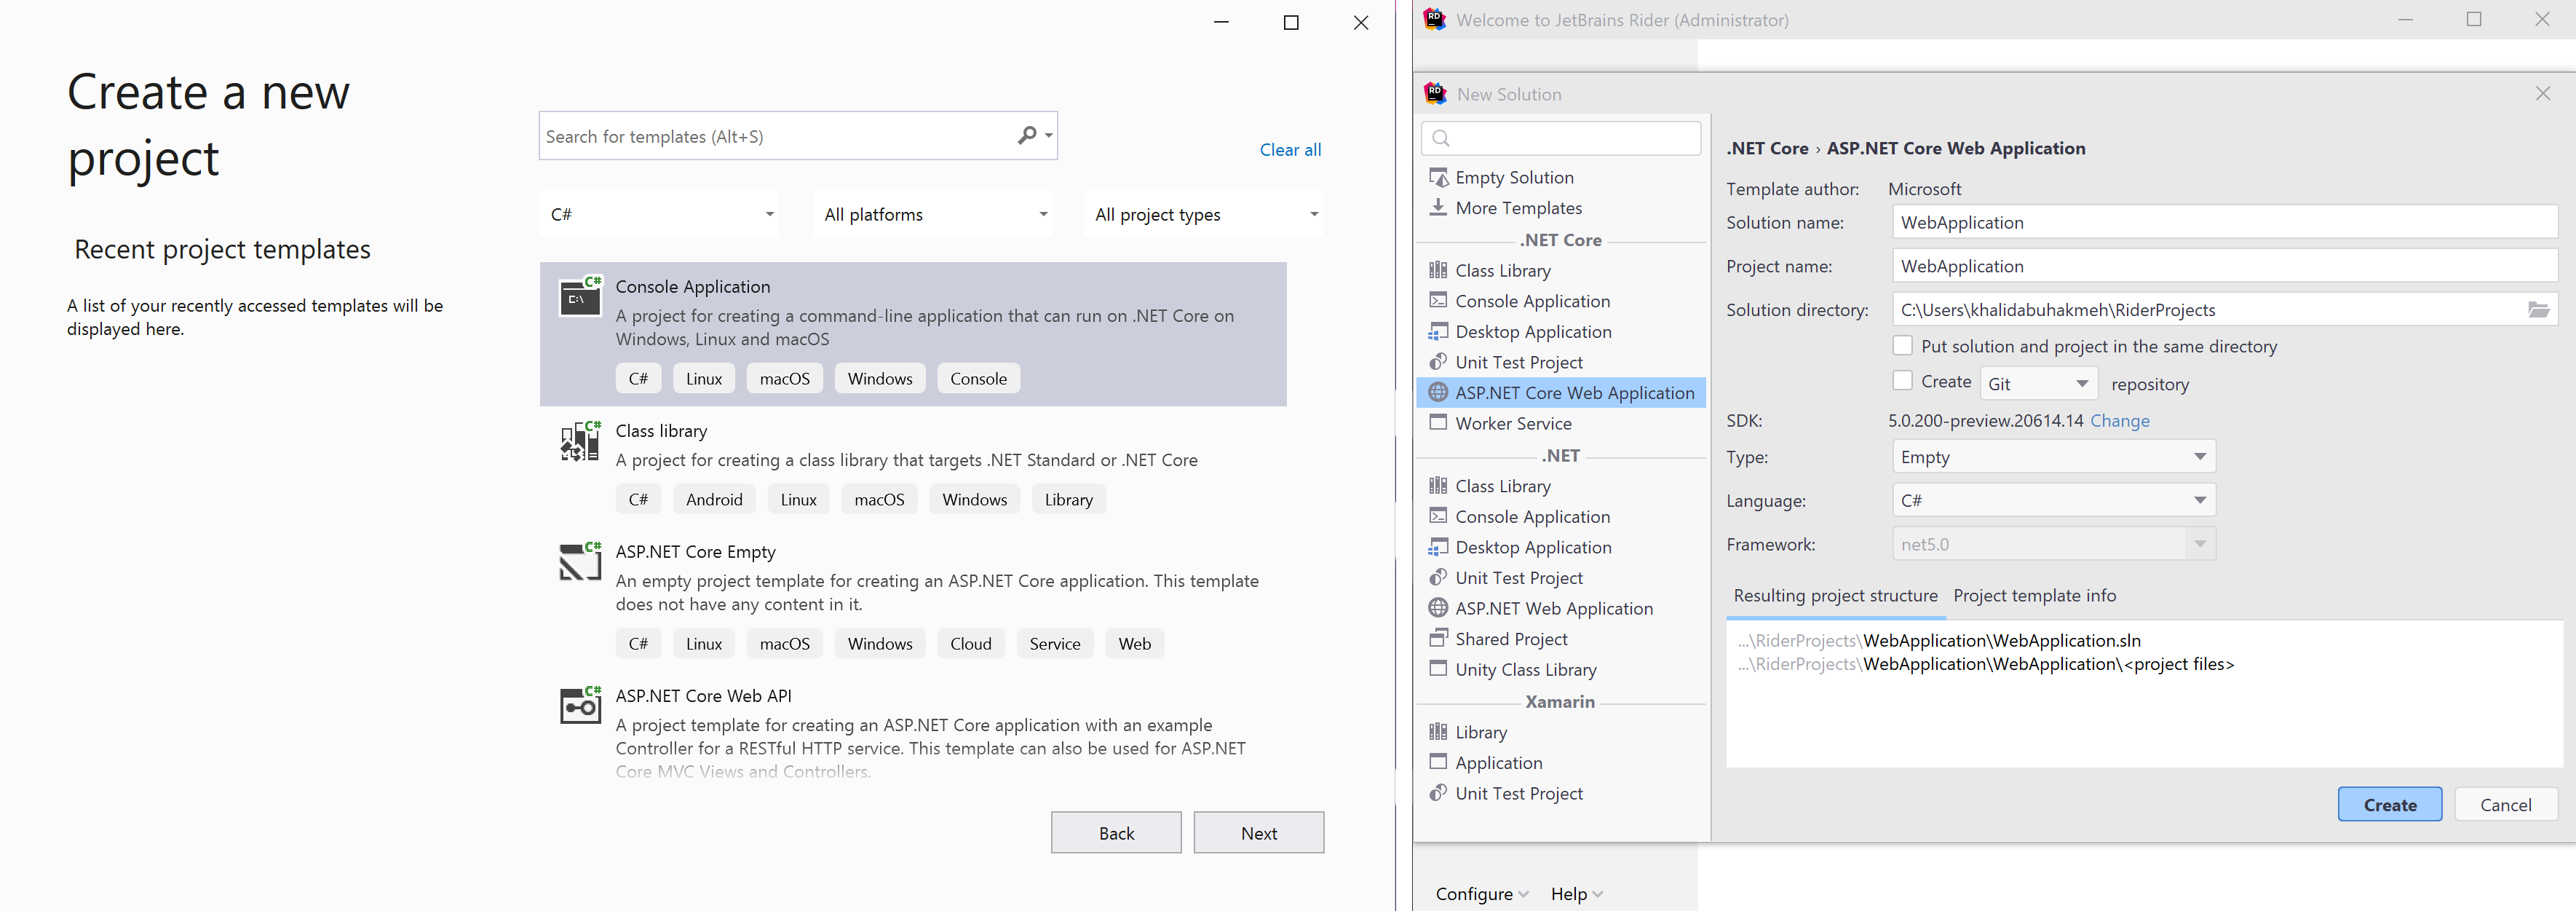 Visual Studio and JetBrains Rider new solution screens